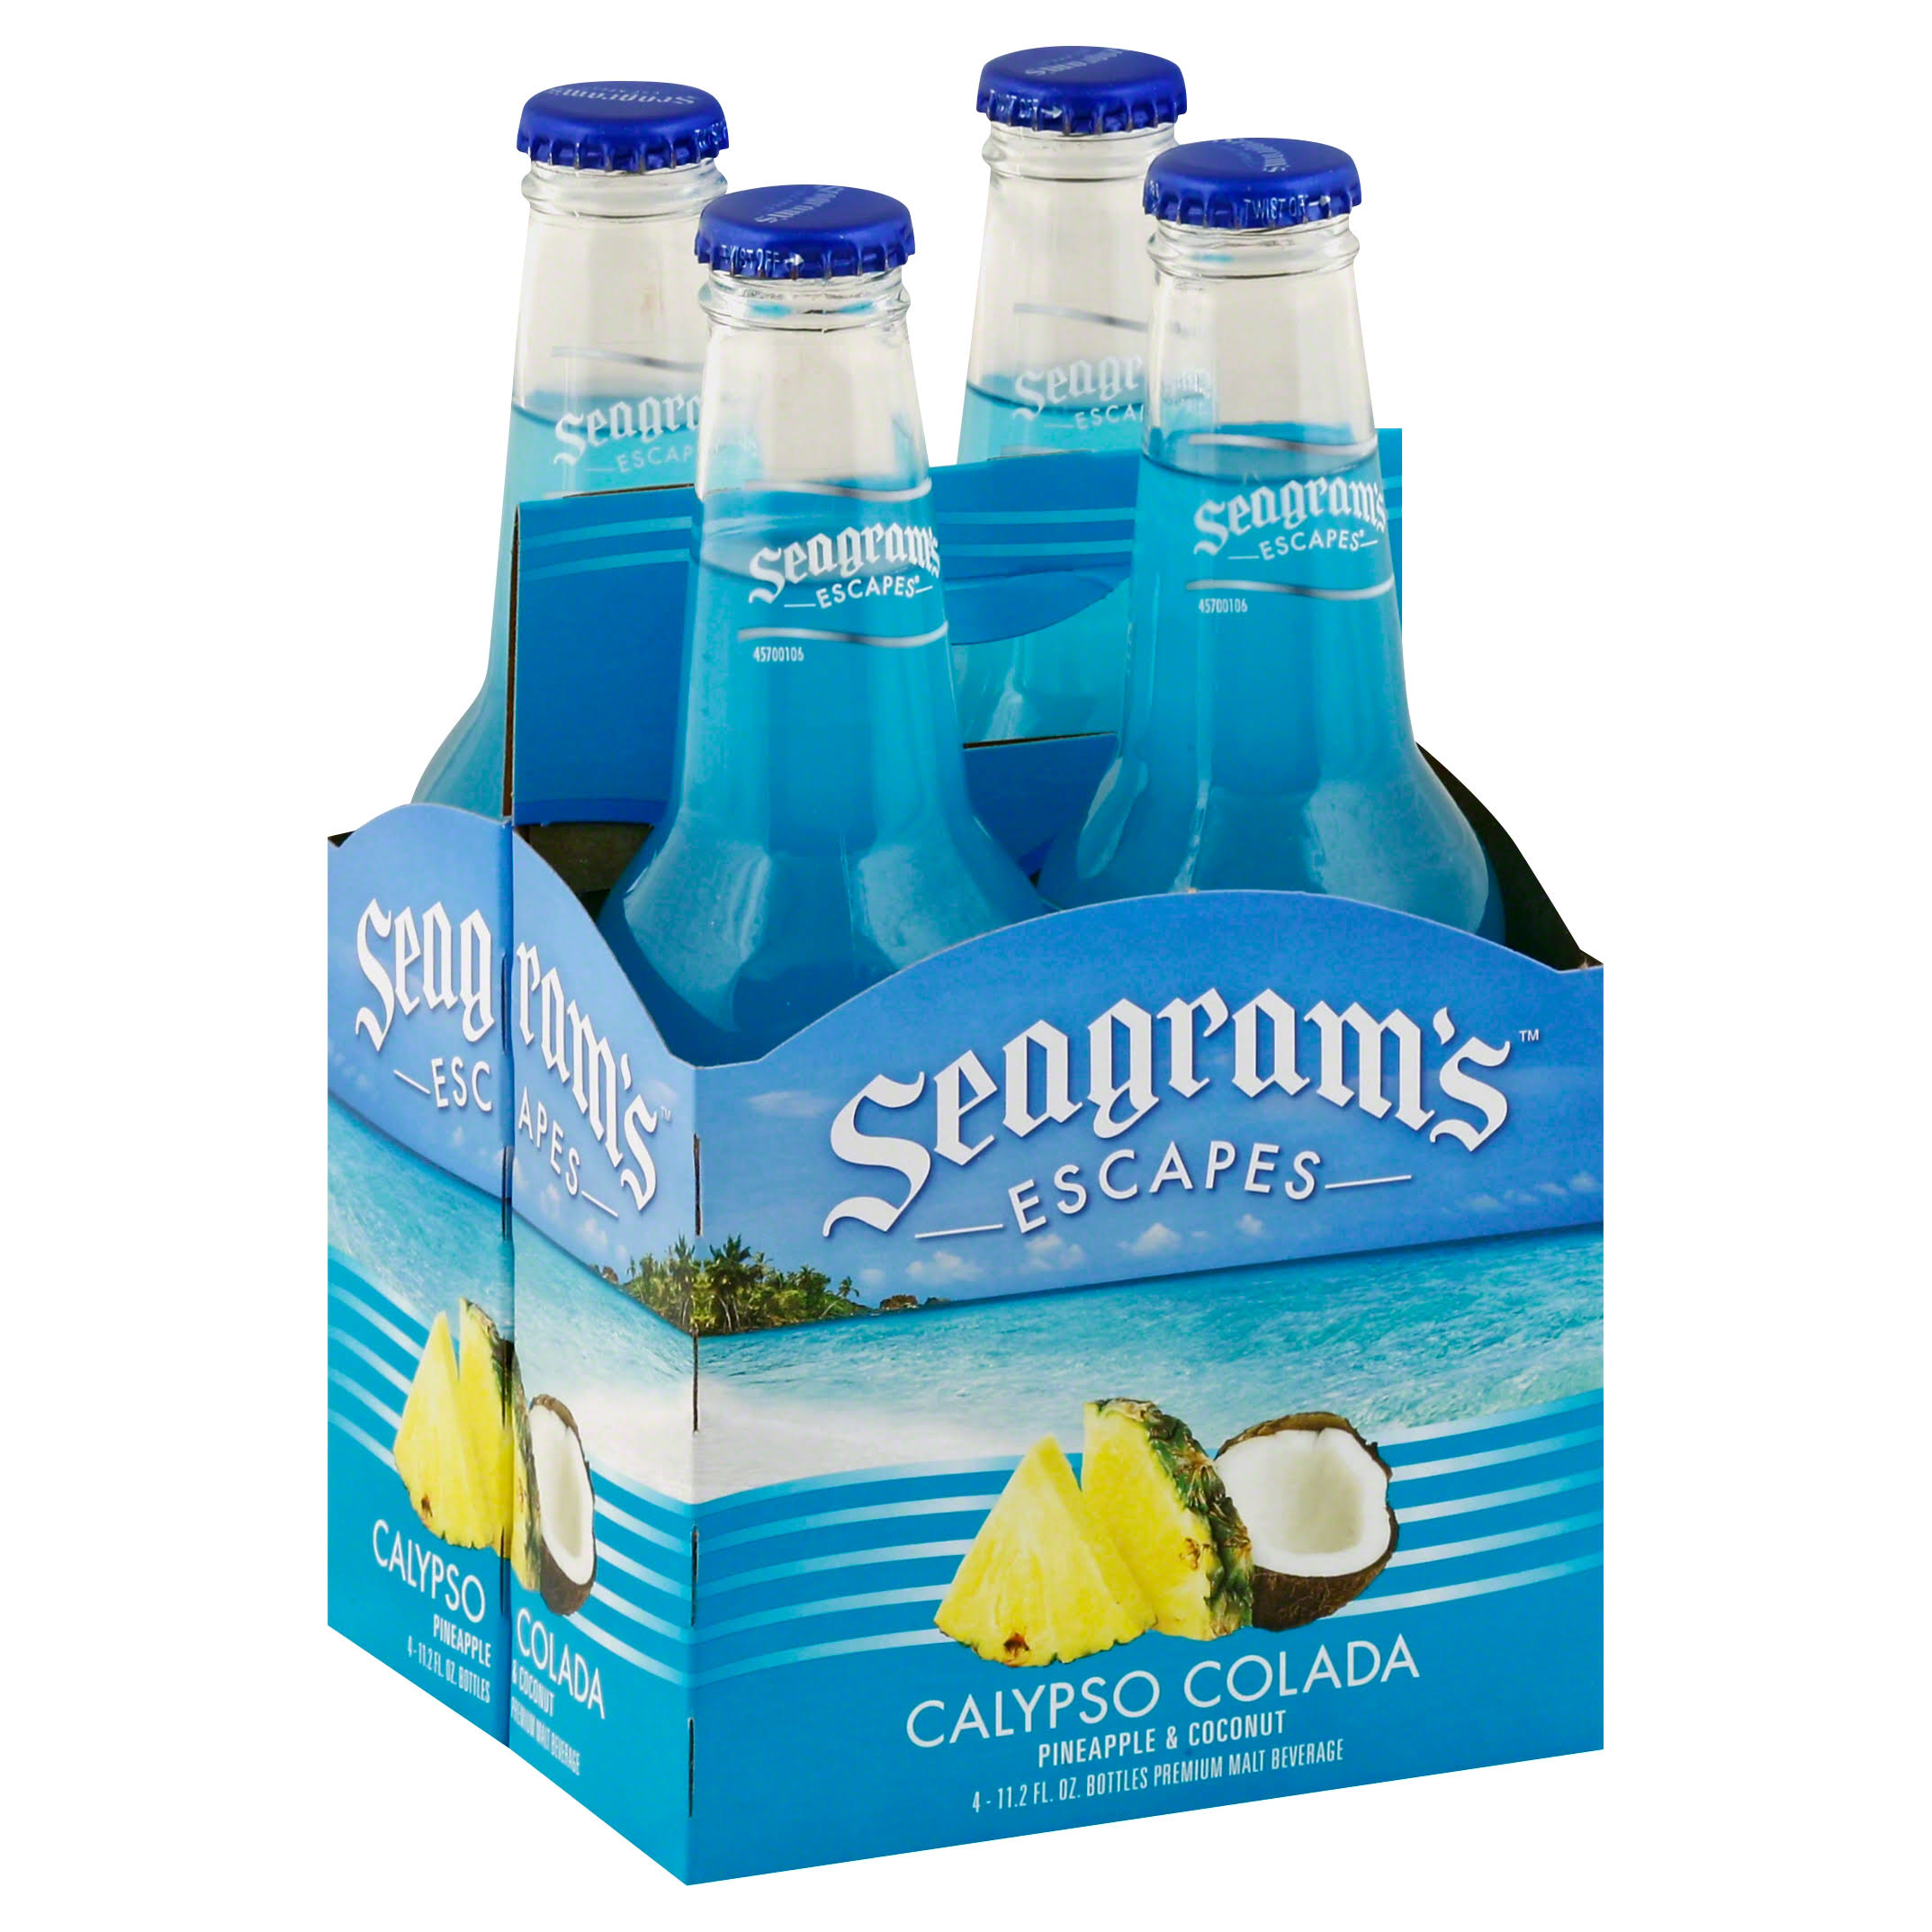 Seagram's Escapes Malt Beverage - Calypso Colada